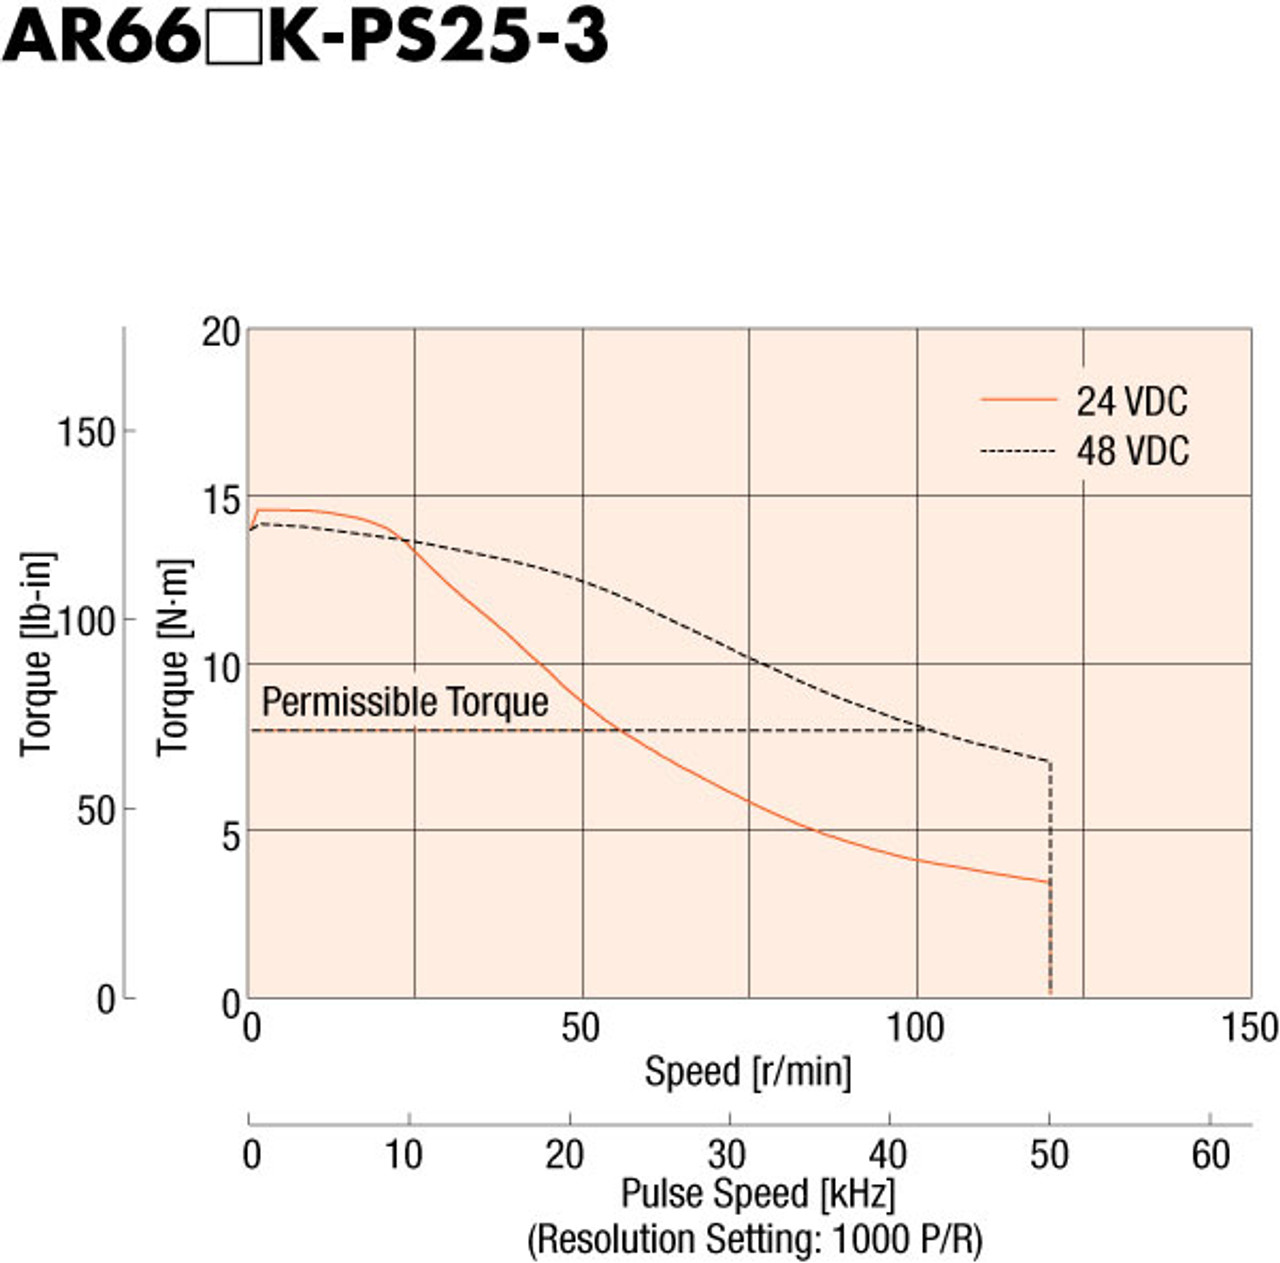 AR66MK-PS25-3 - Speed-Torque